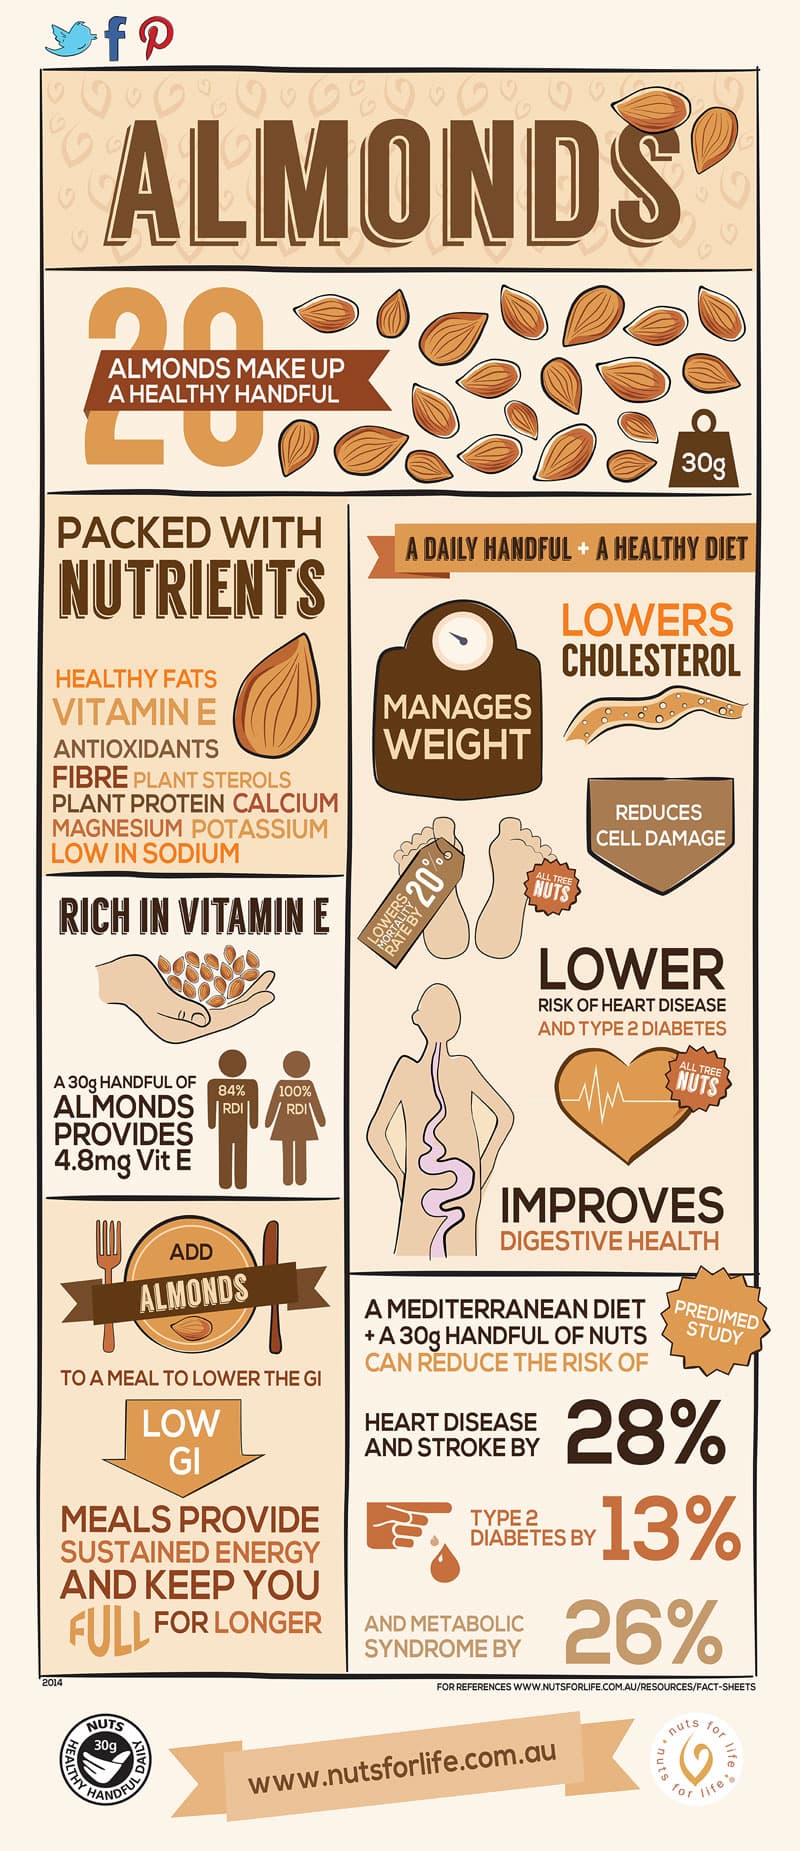 Health benefits of almonds